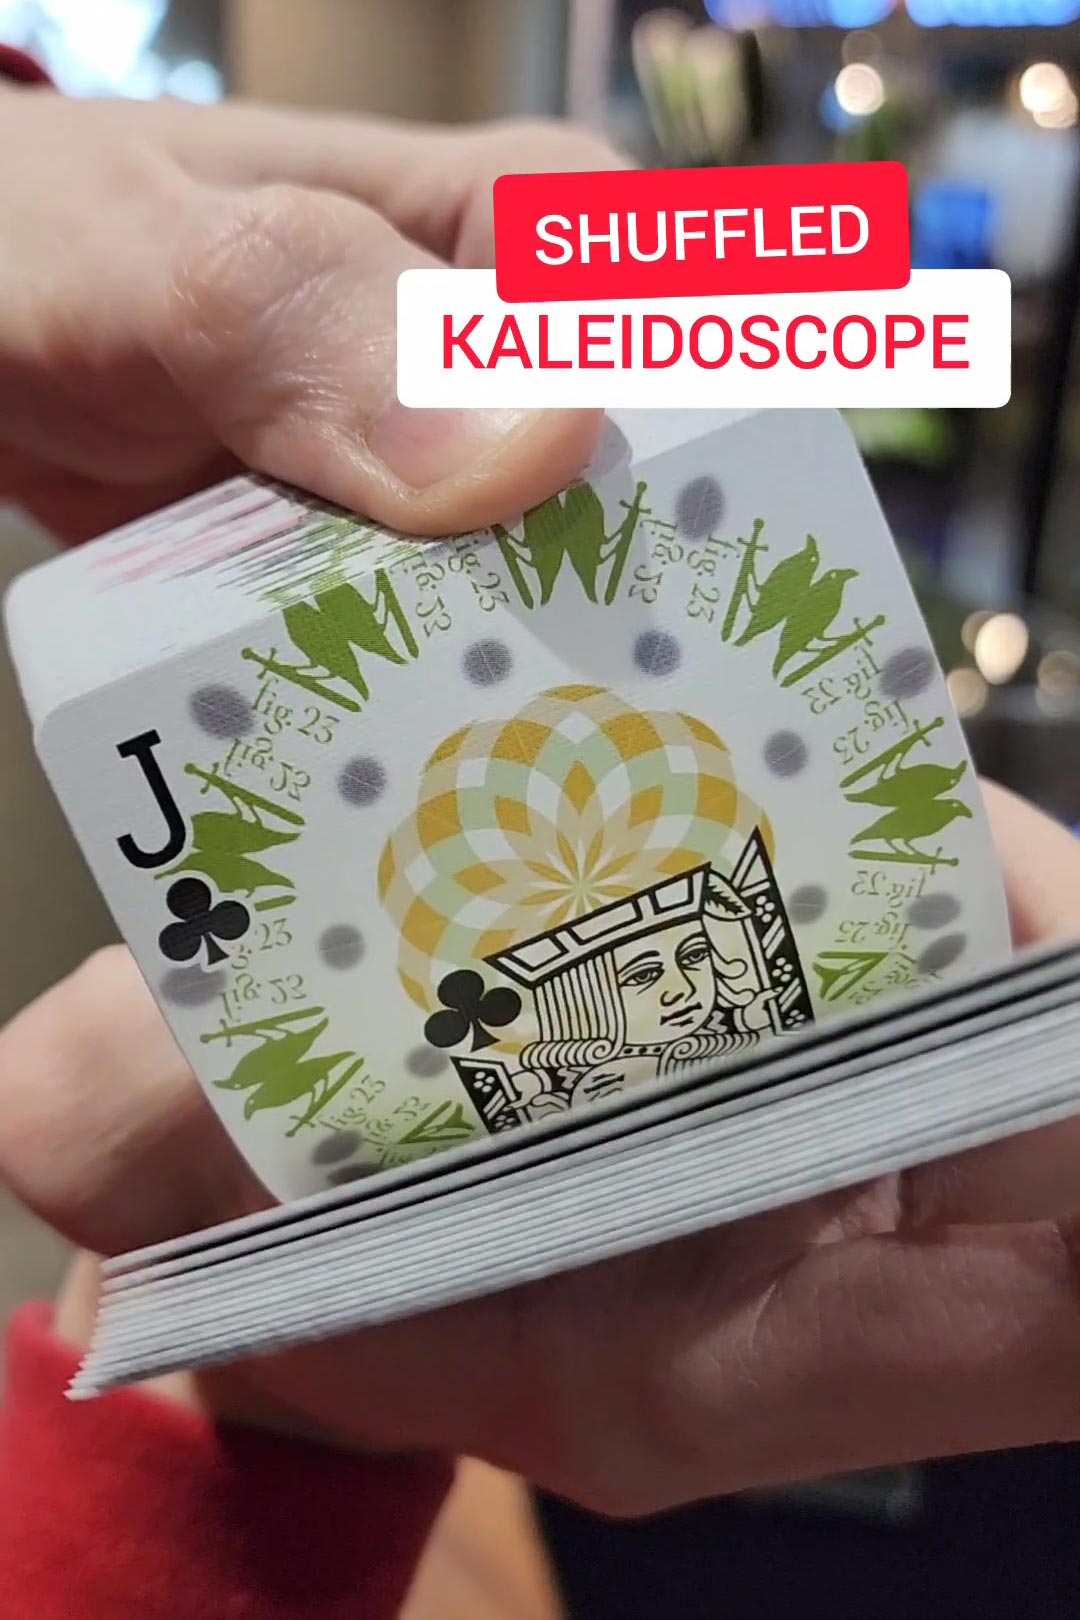 Kaleidoscope: Does it look good when shuffled?